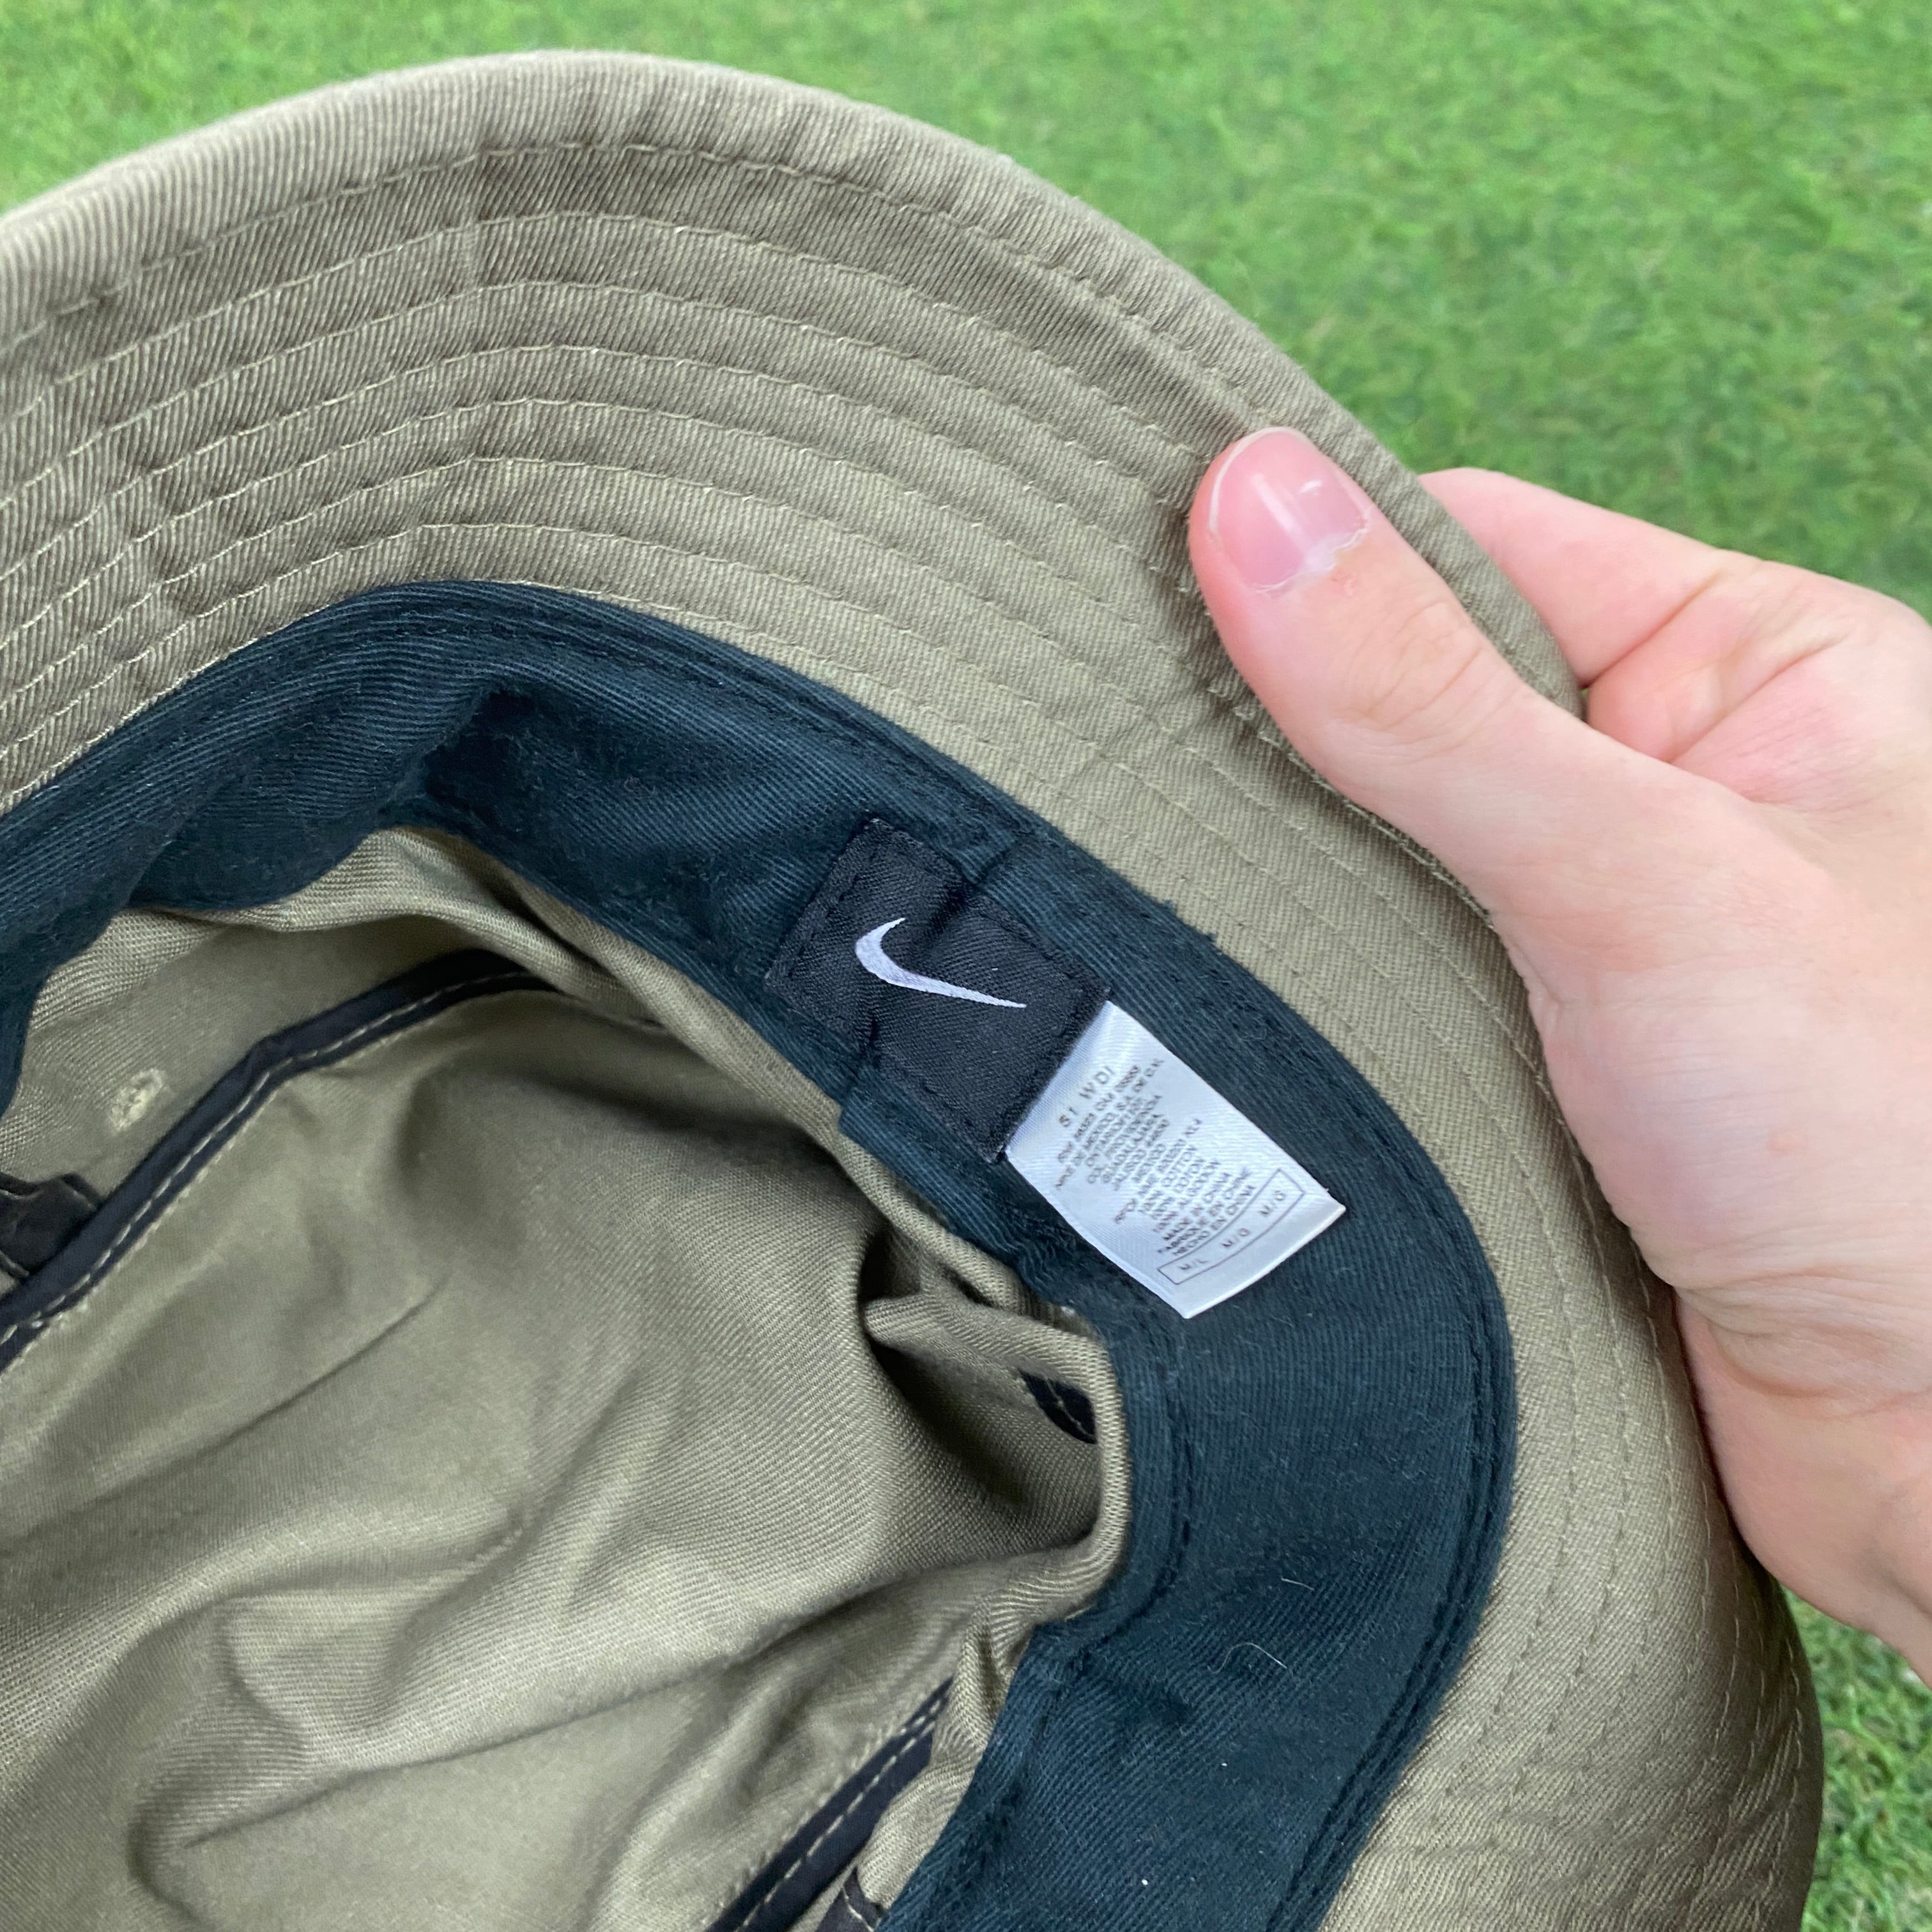 00s Nike Bucket Hat Green Brown